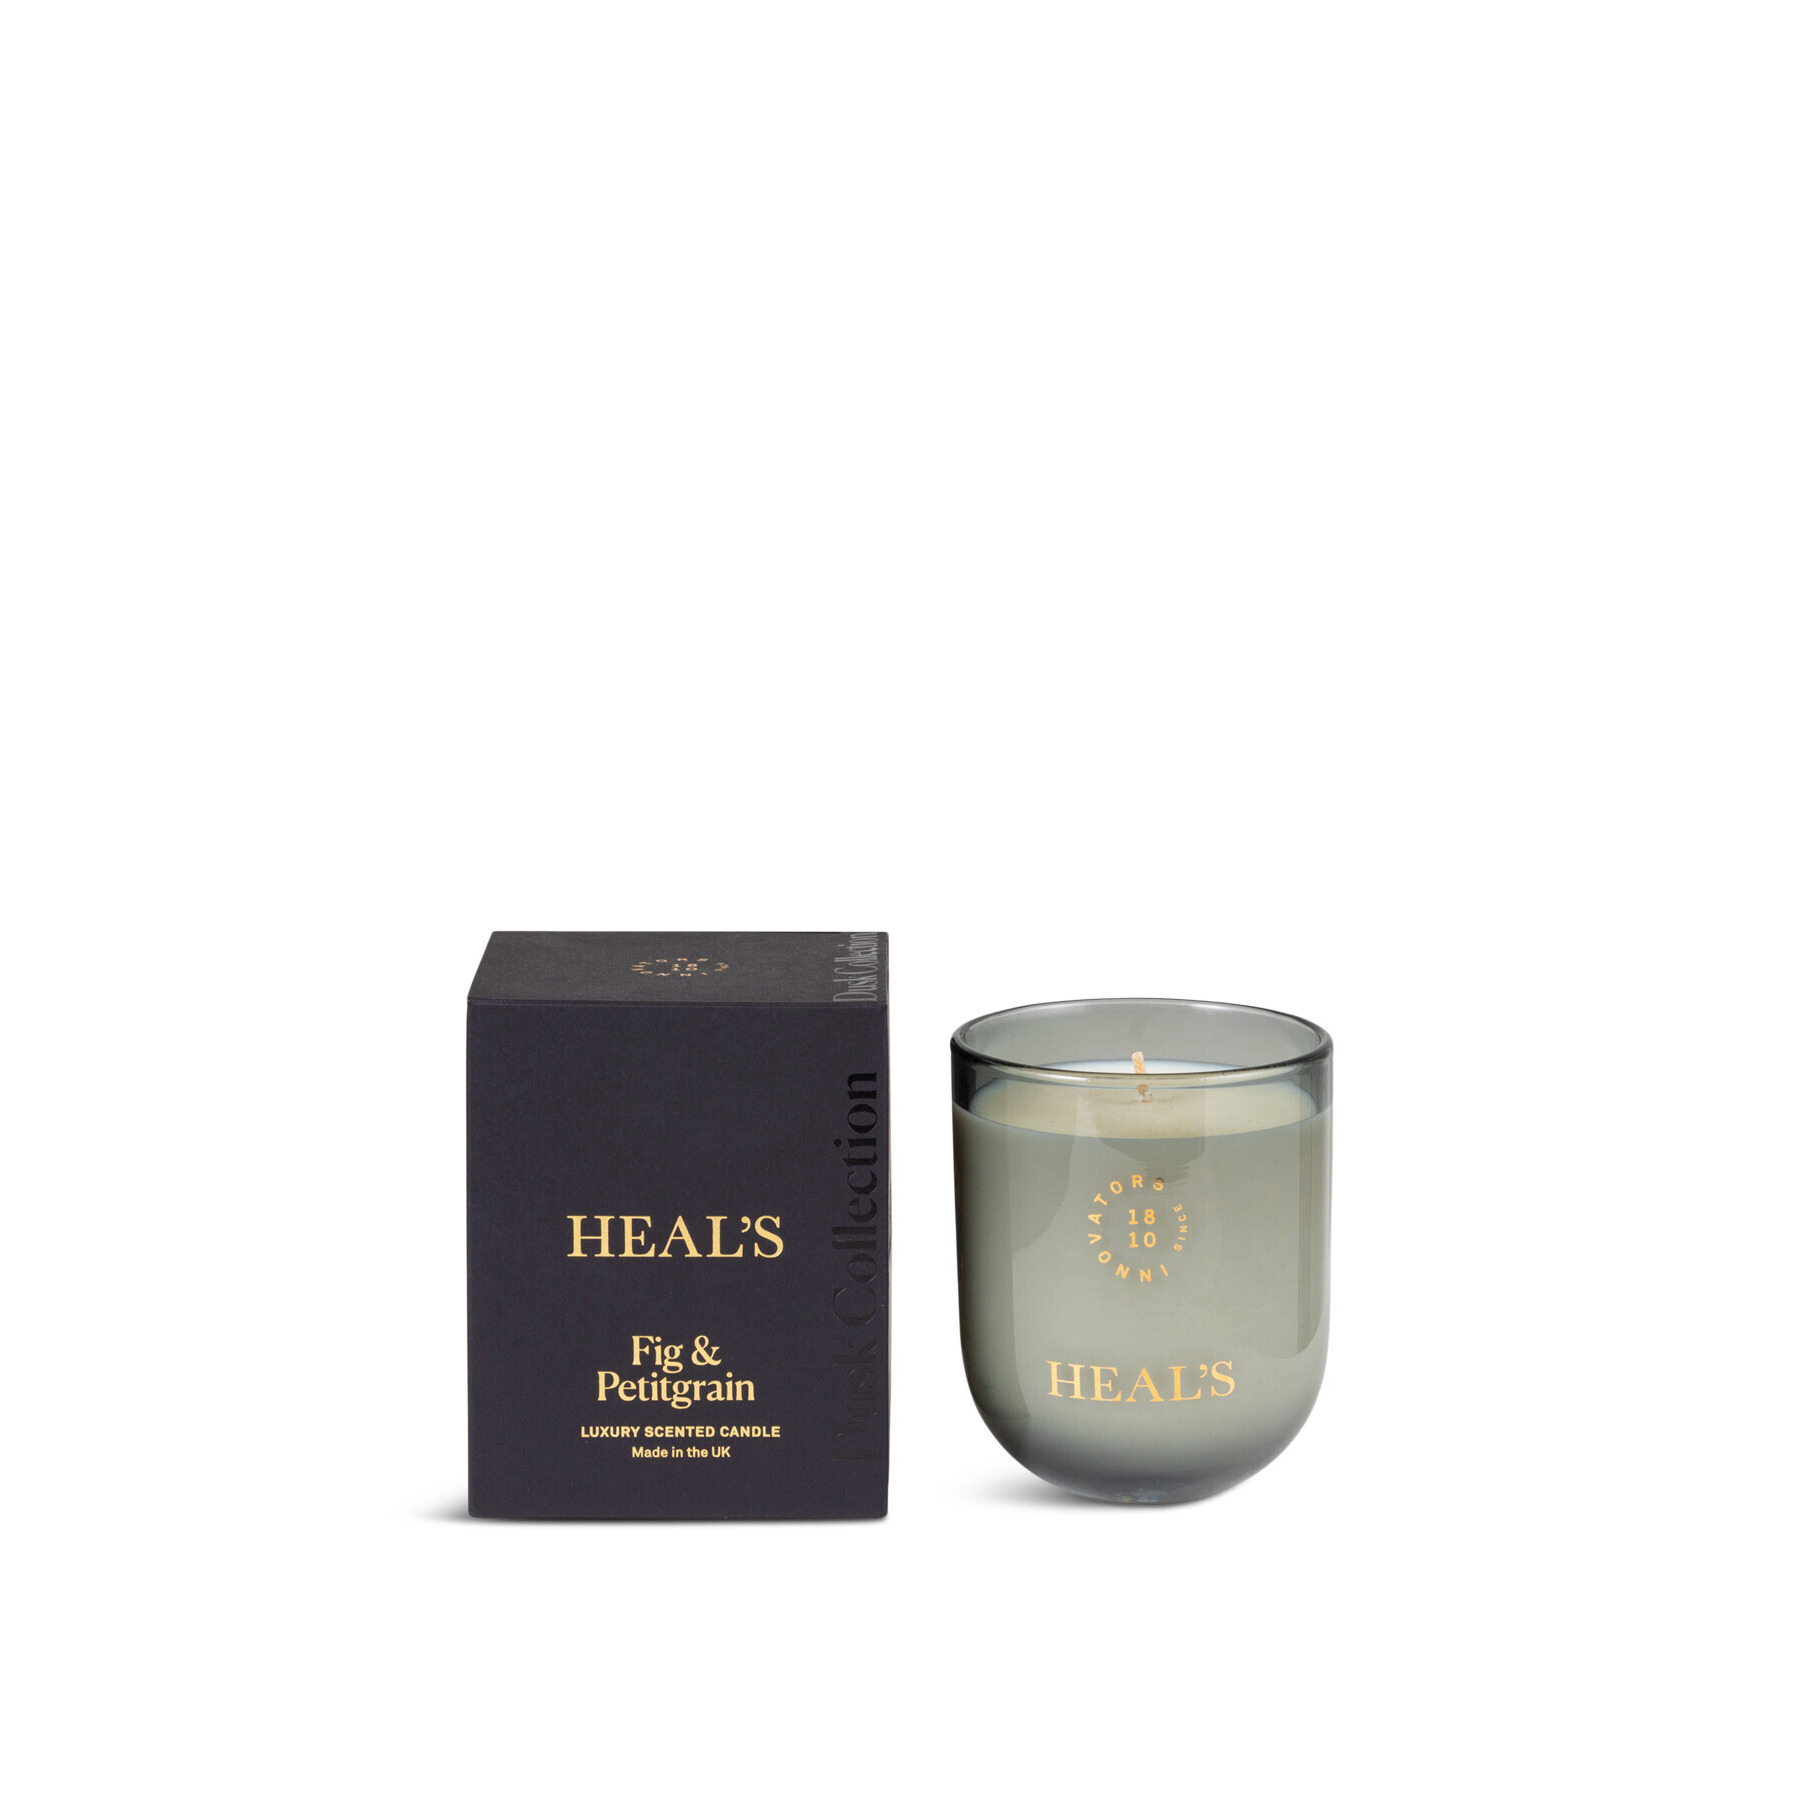 Heal's Dusk Petitgrain & Fig Candle Grey - image 1